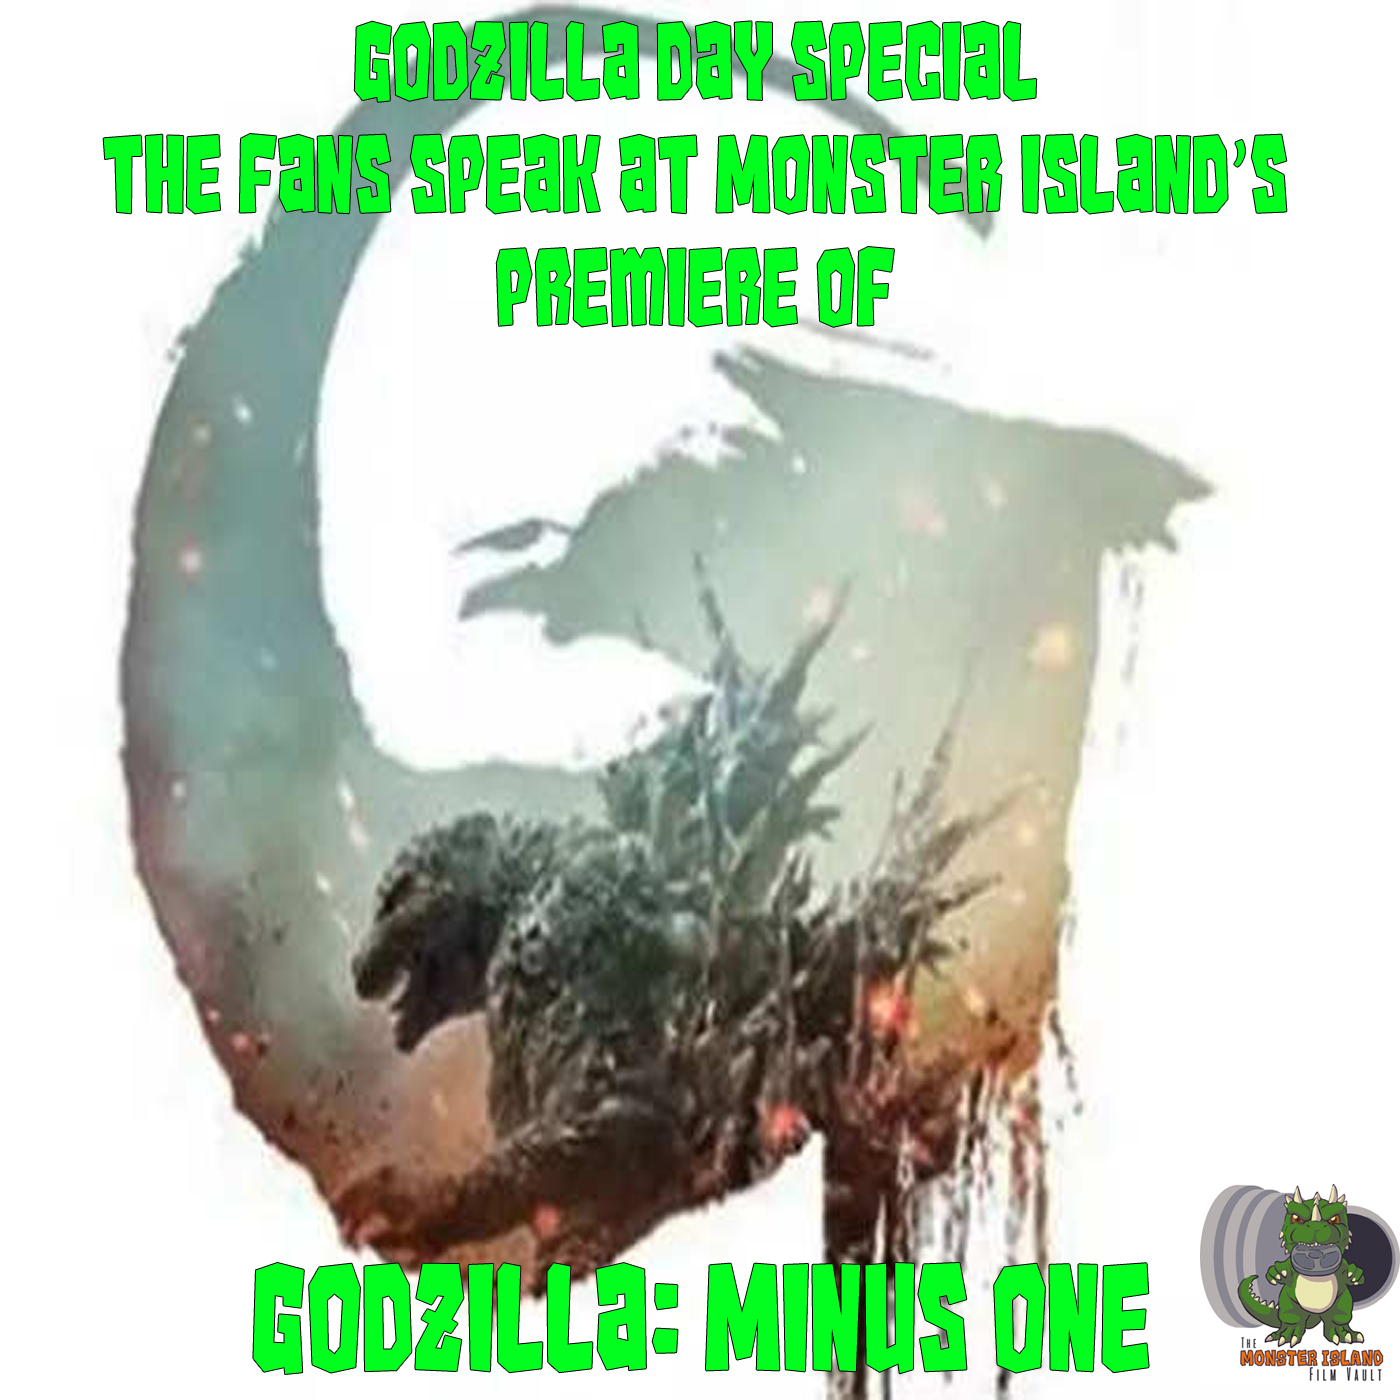 Godzilla Day Special: The Fans Speak at Monster Island’s Premiere of ‘Godzilla: Minus One’